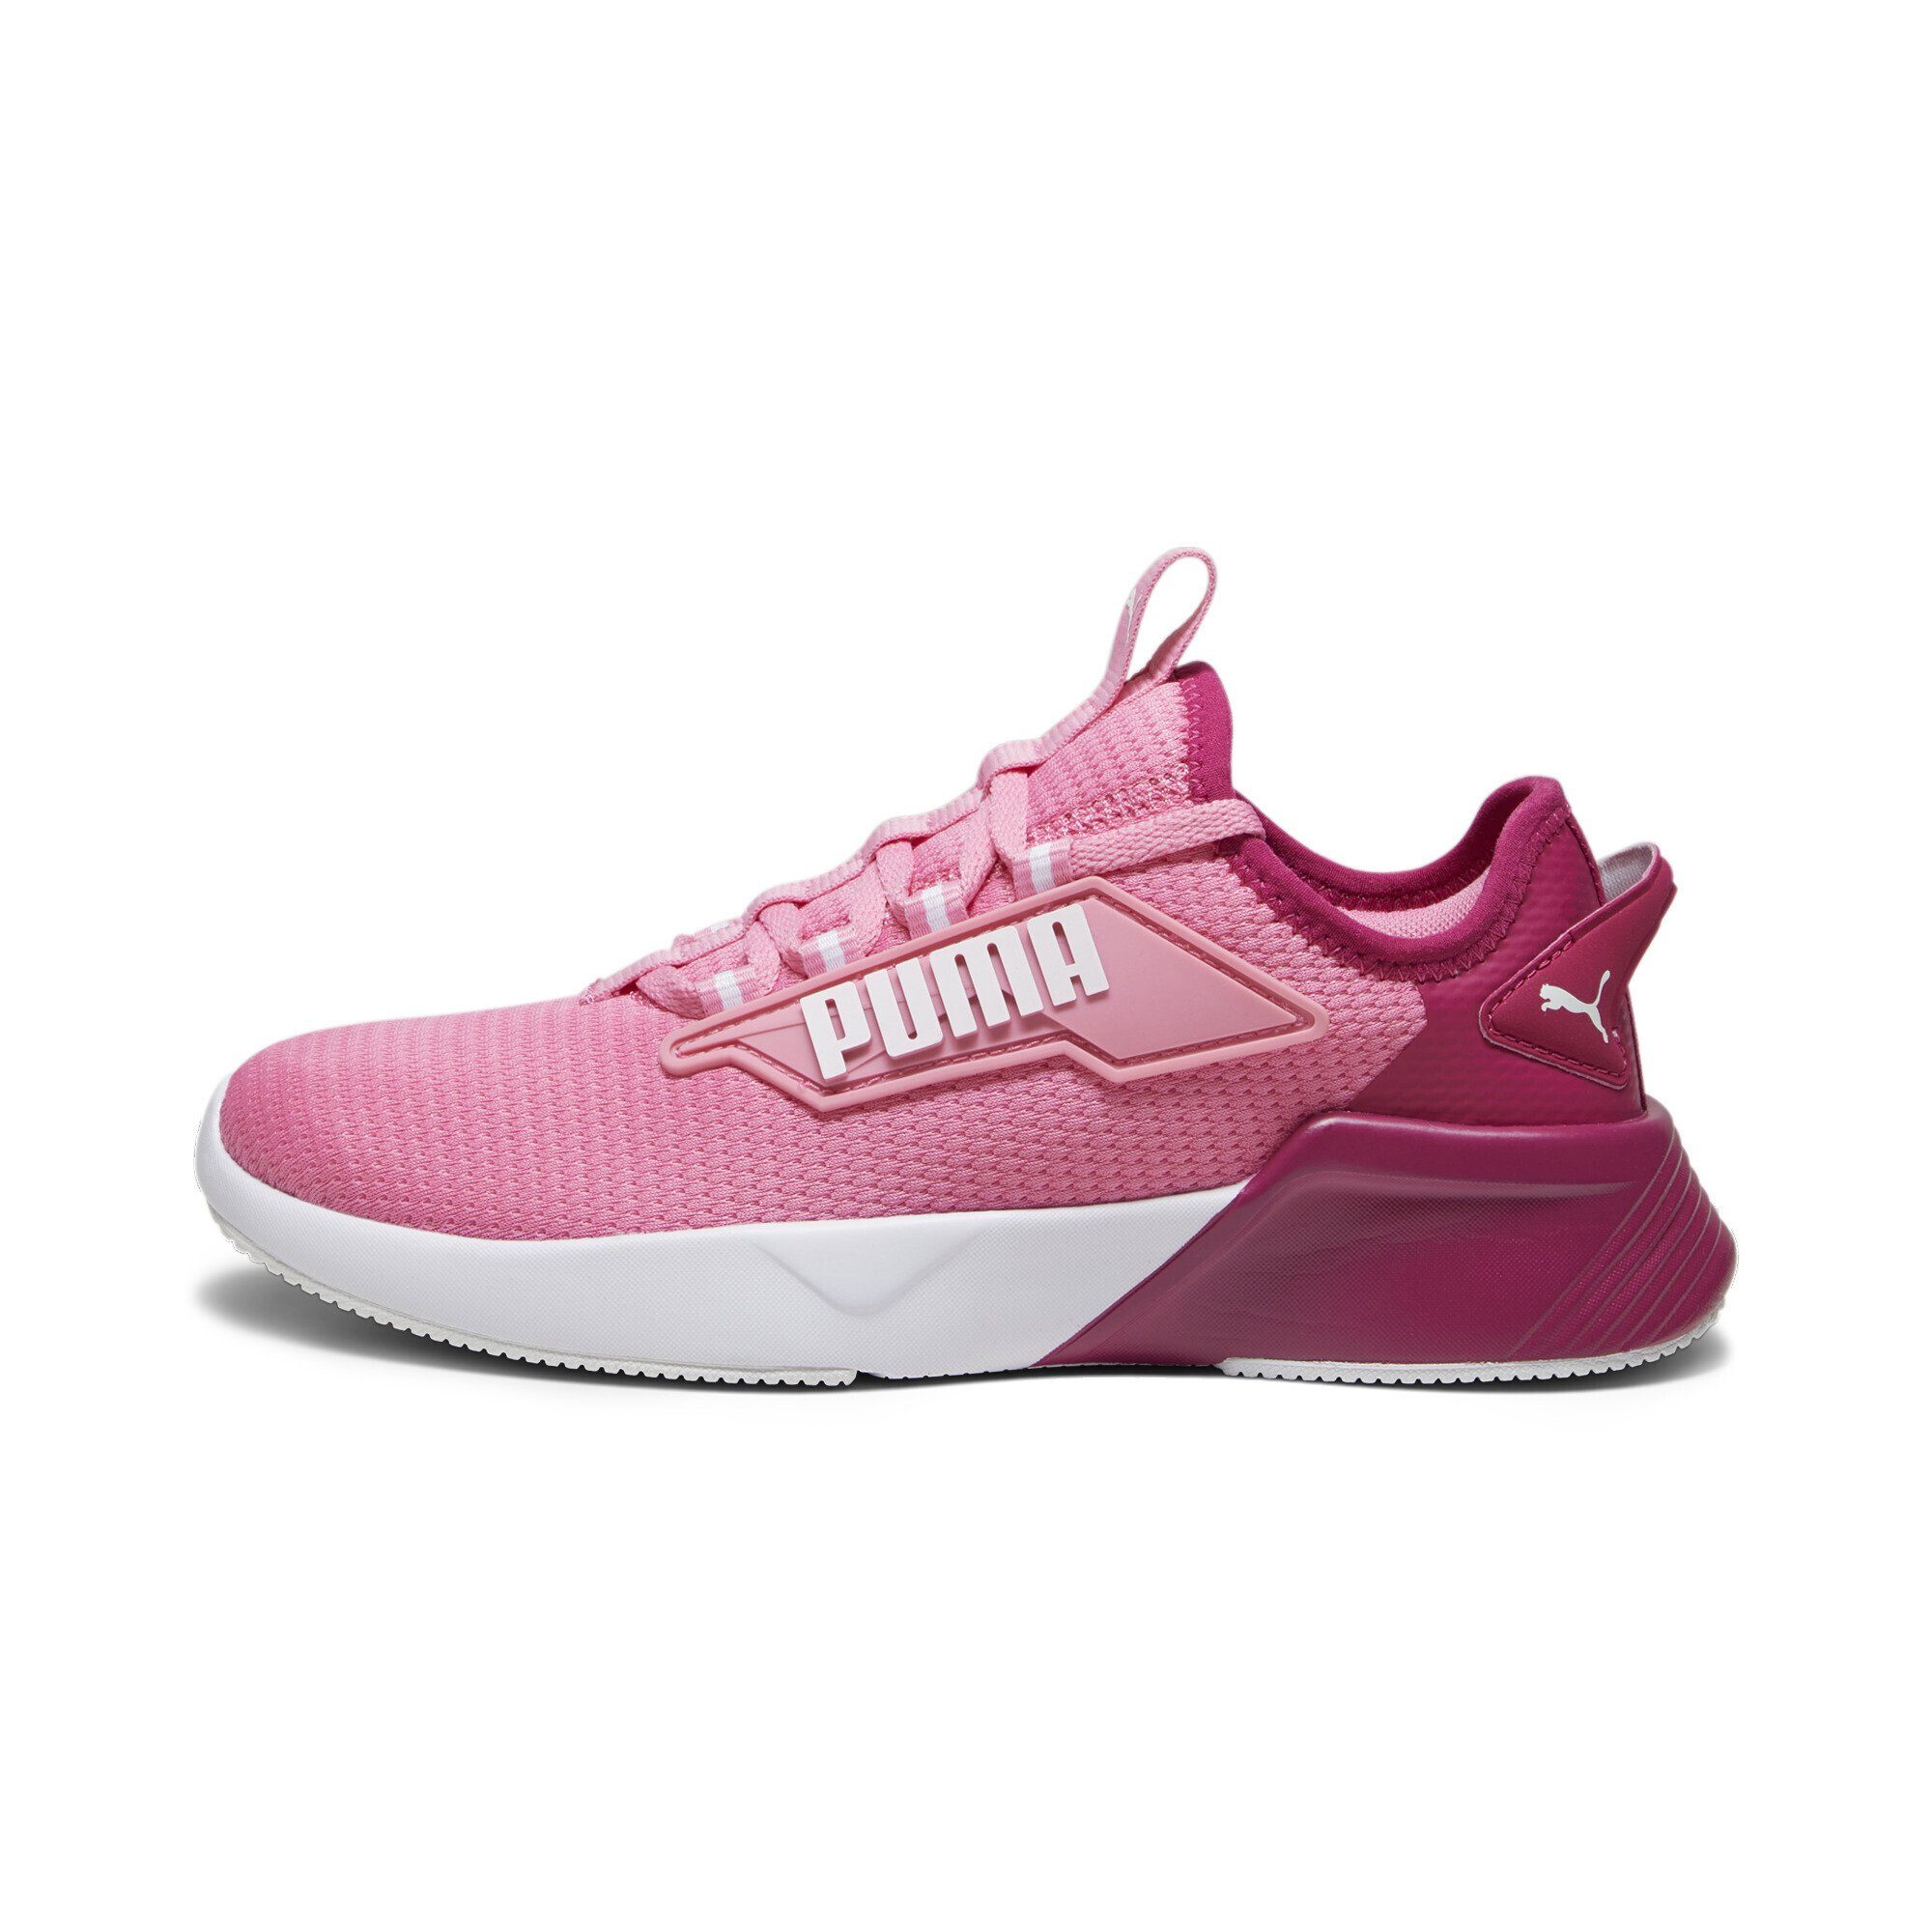 Jugendliche Pink Retaliate 2 White PUMA Burst Laufschuh Sneakers Strawberry Pinktastic